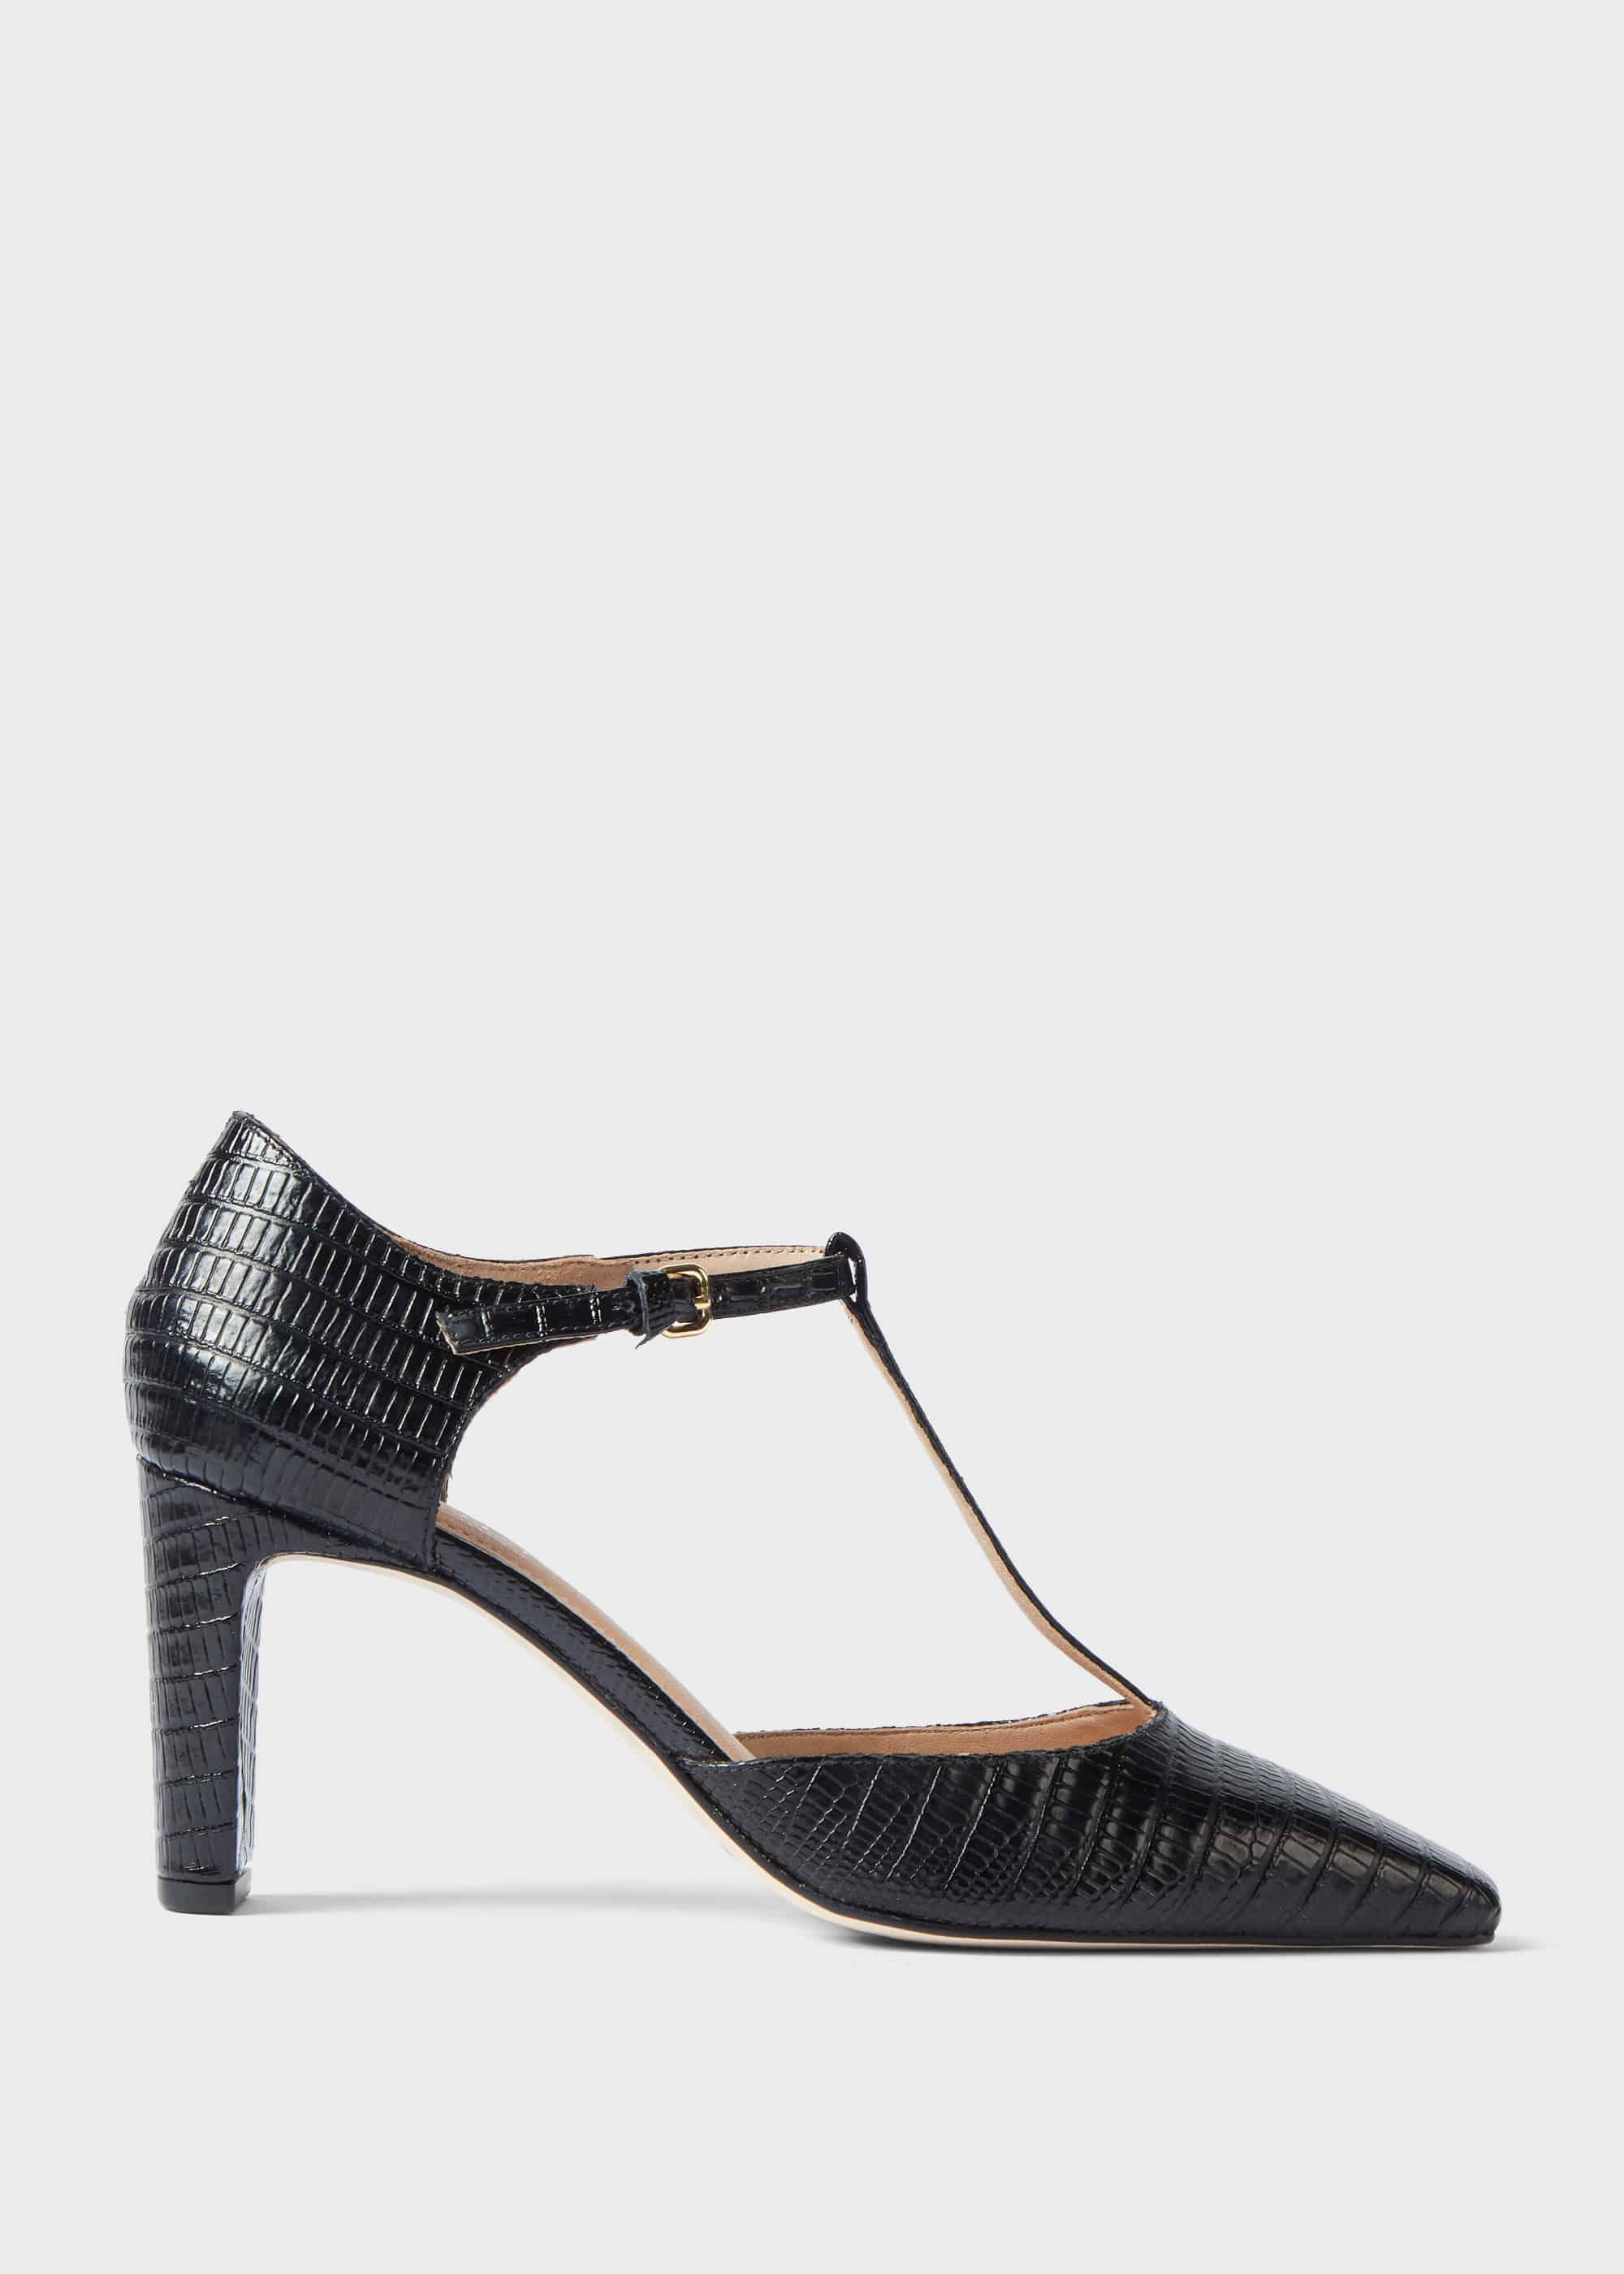 black leather court shoes block heel